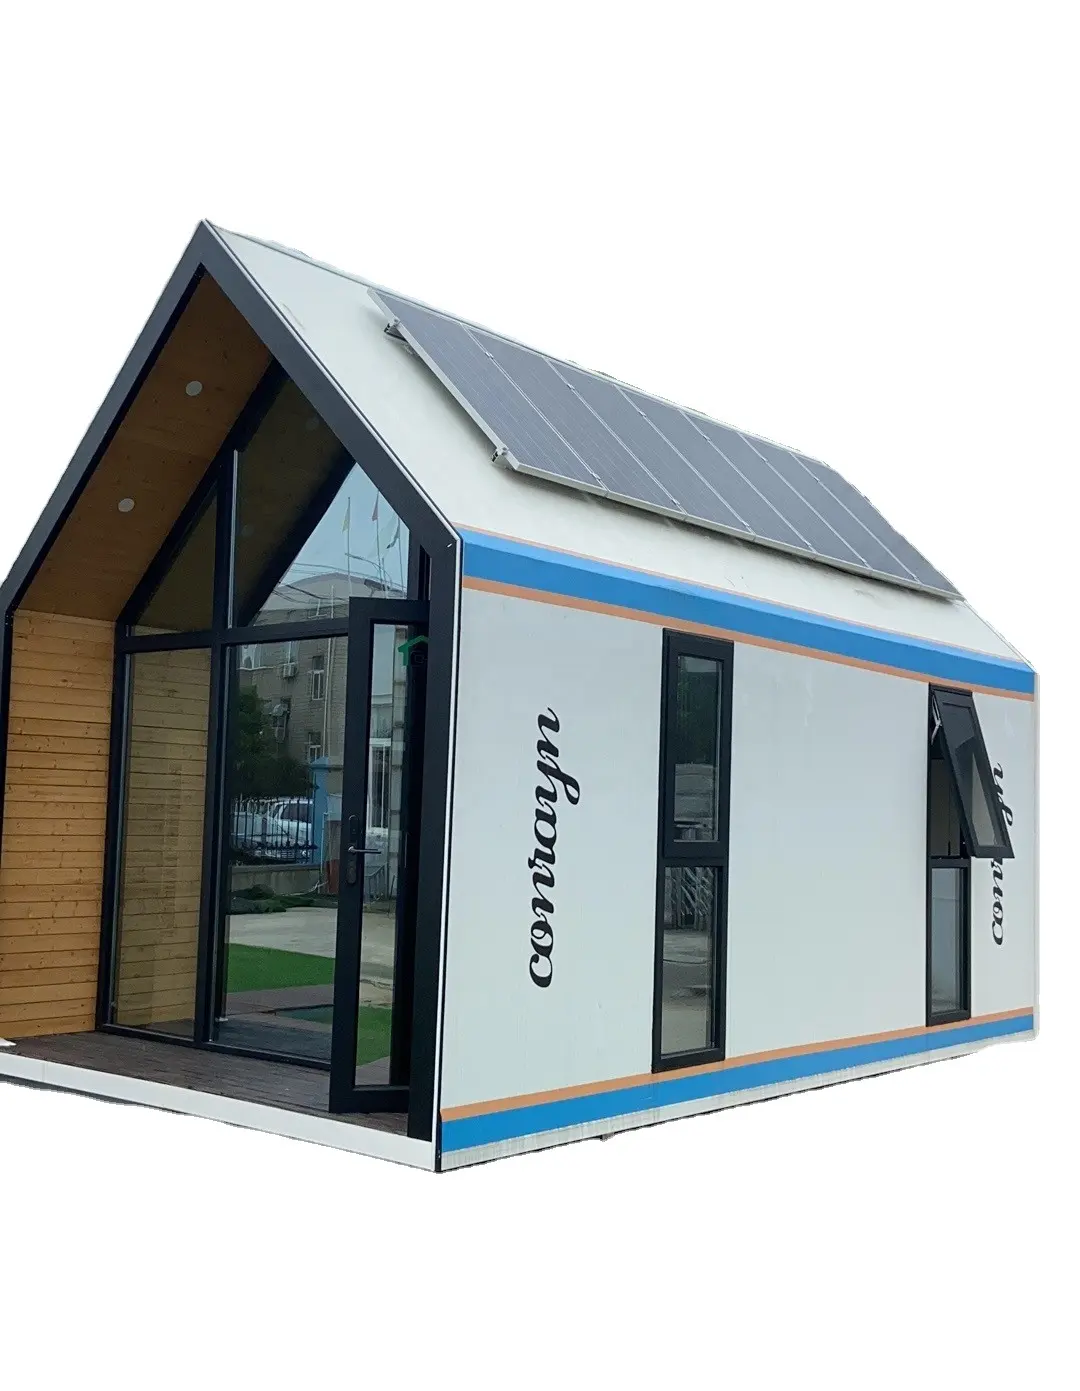 Casa solar exterior móvel casa modular pré-fabricada para turismo cultural e residência itinerante